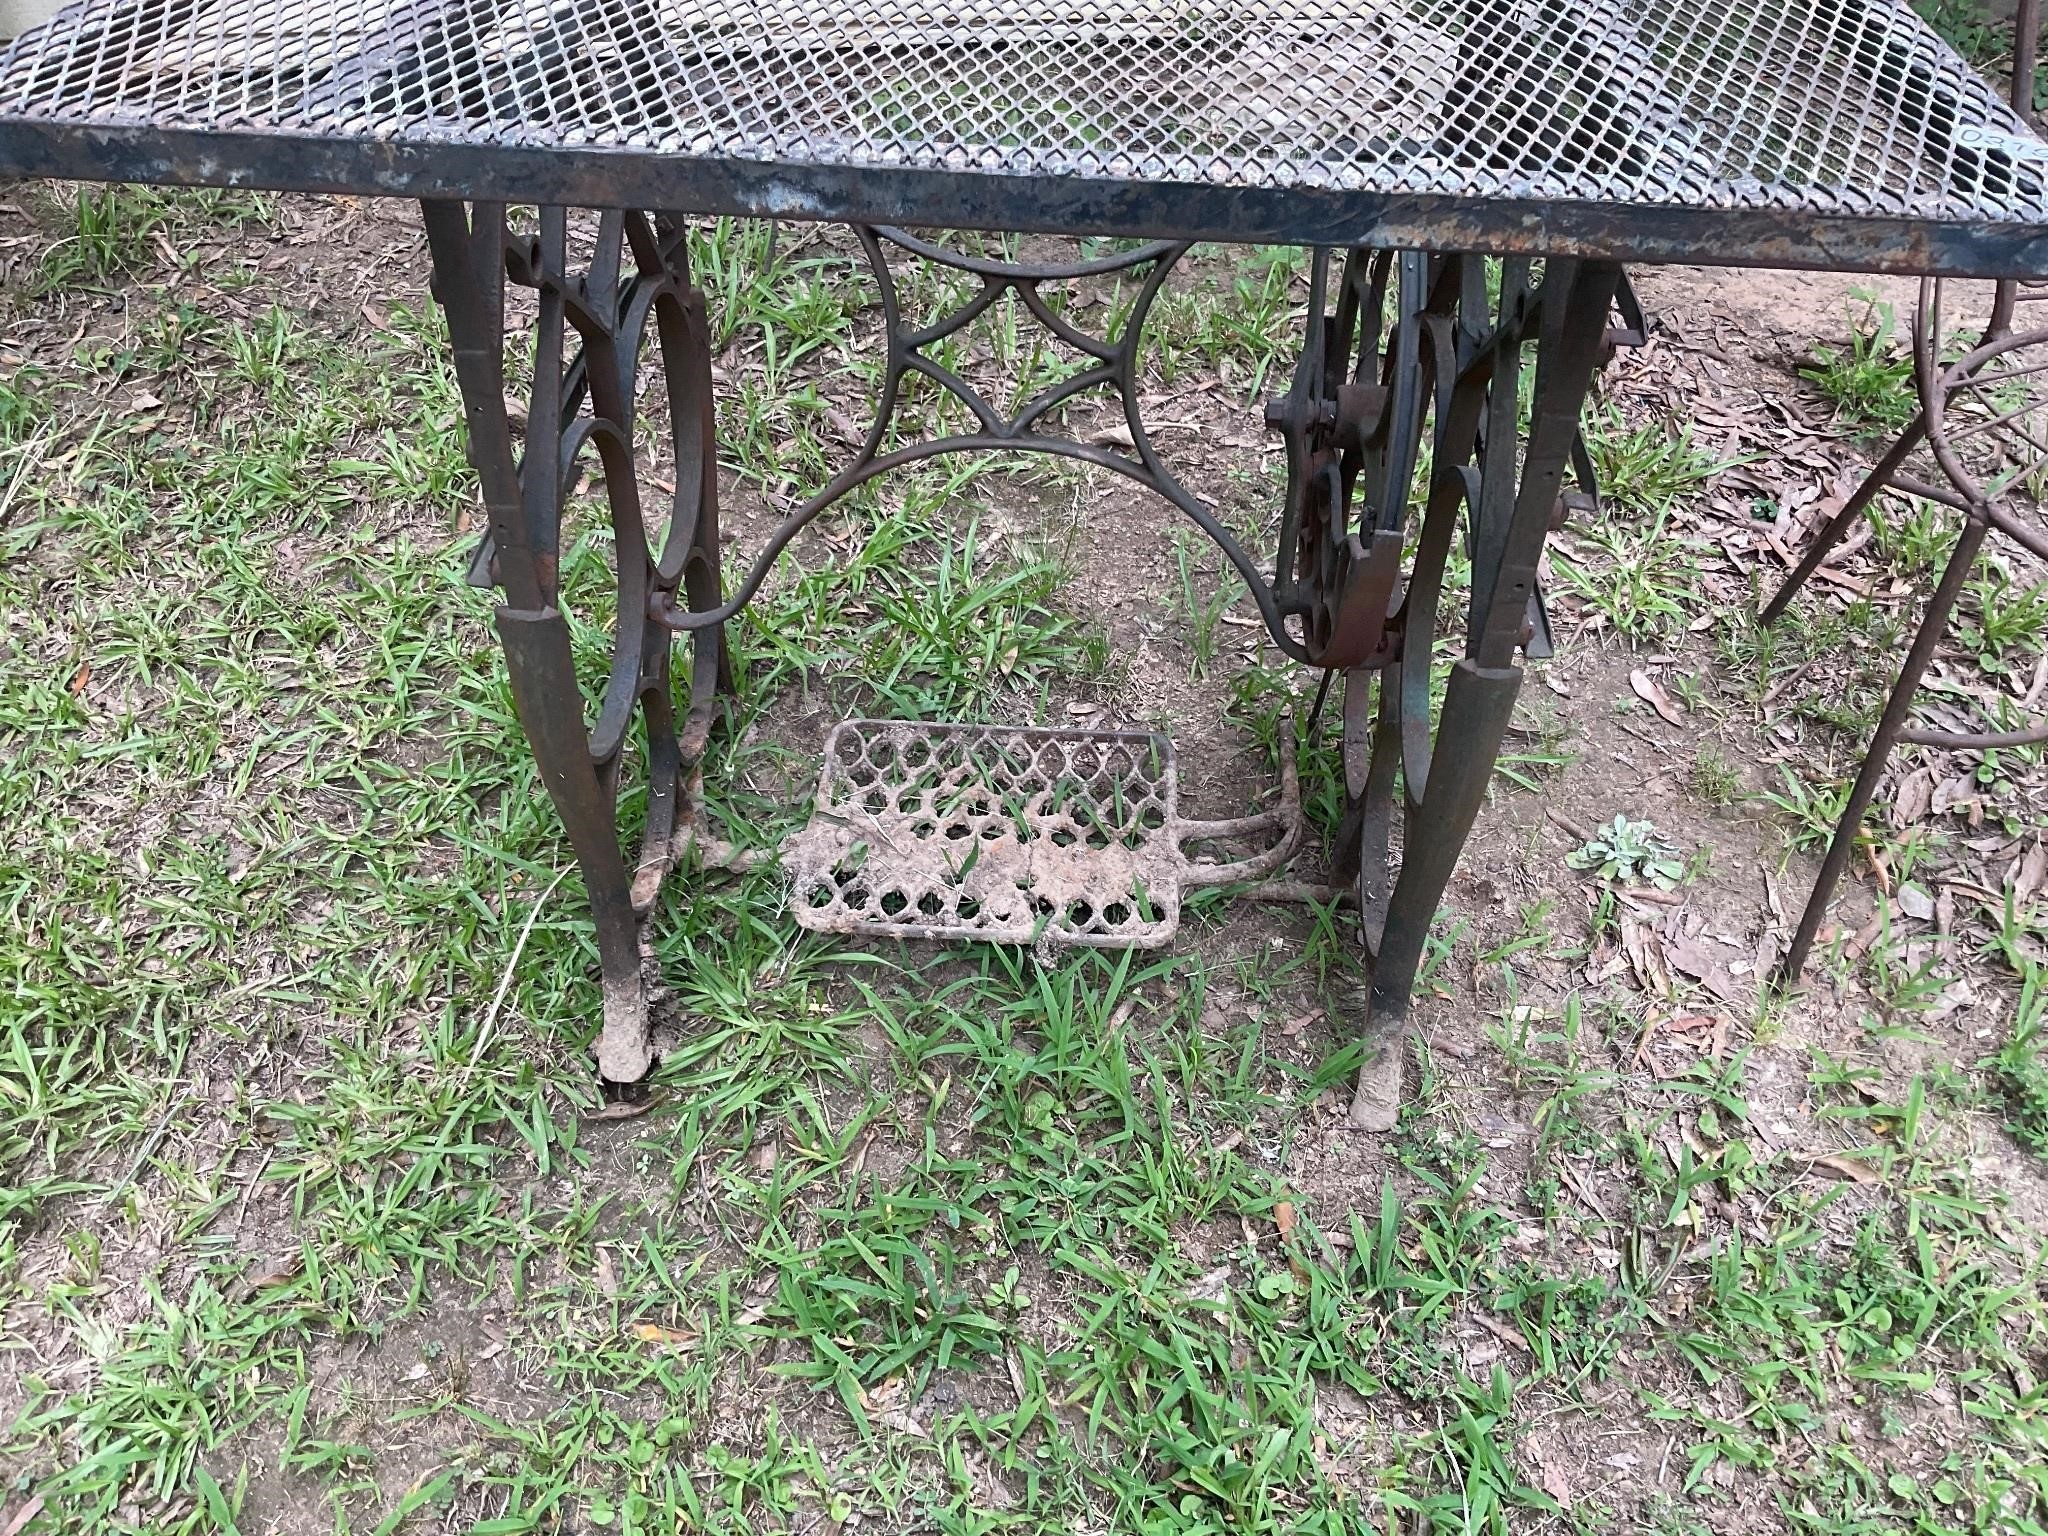 Treadle Base Table, metal chair- see table leg